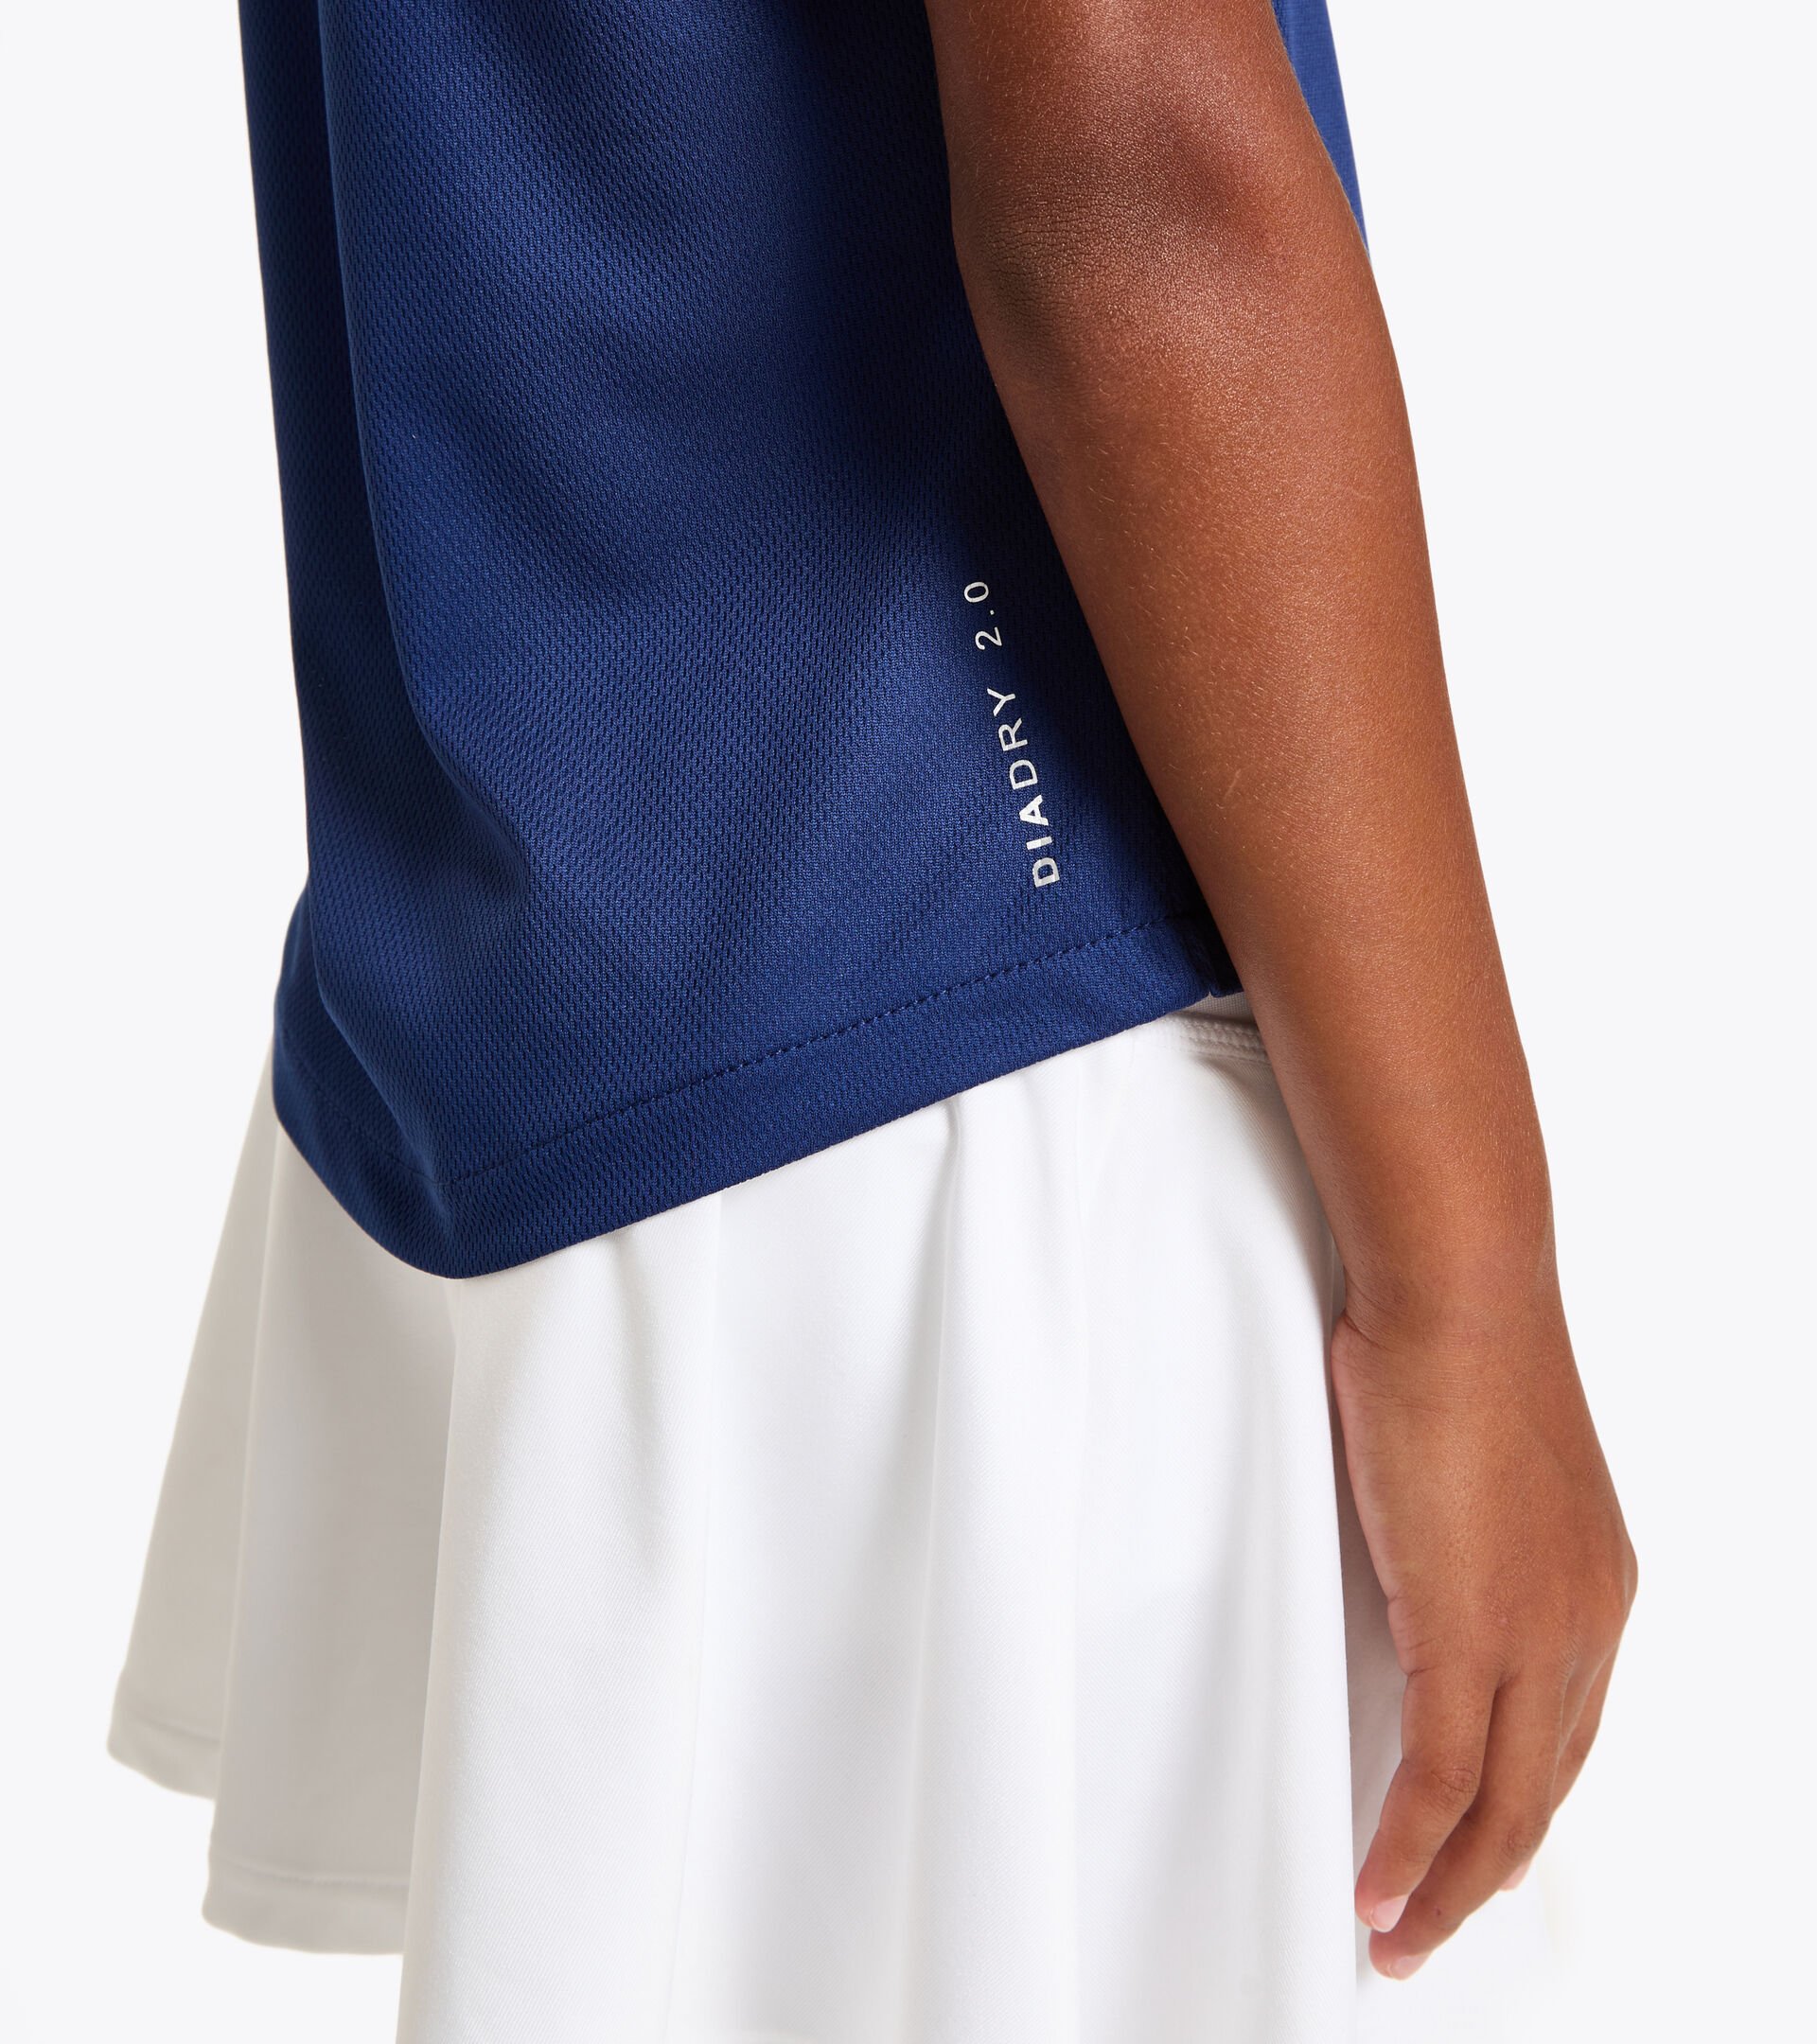 Tennis-T-Shirt - Junior G. T-SHIRT COURT GUTBLAU - Diadora